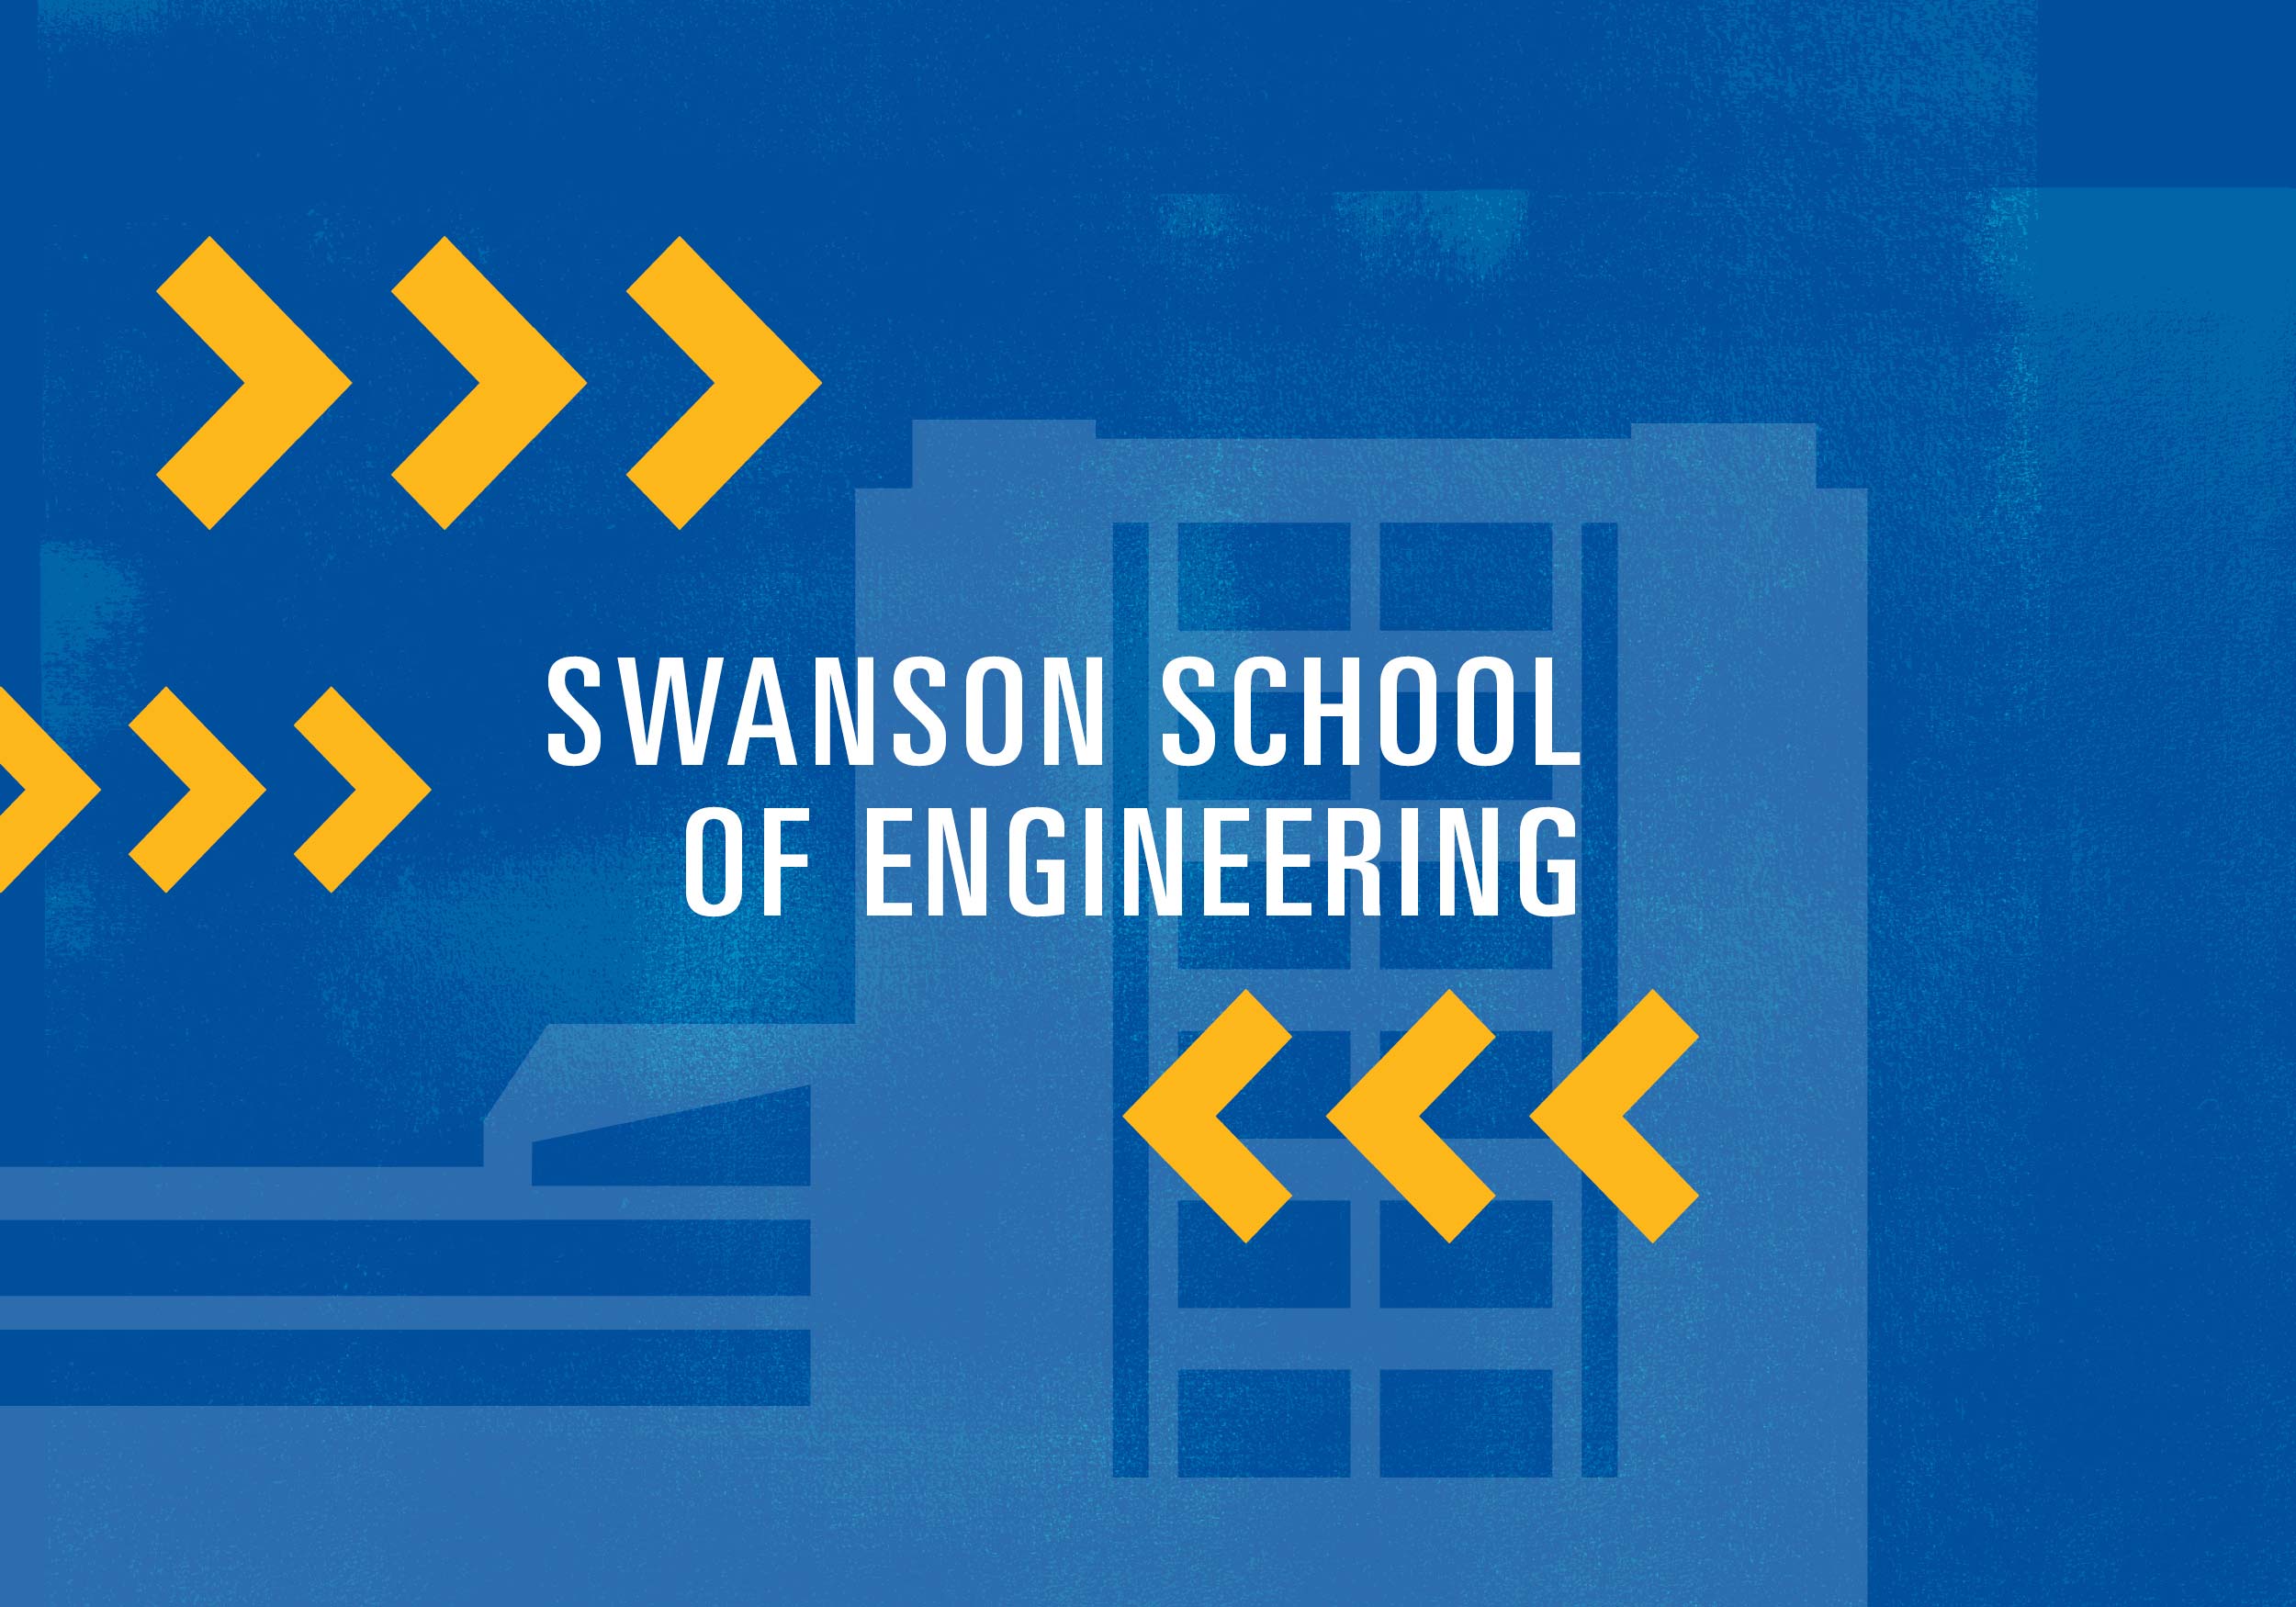 The Swanson School of Engineering banner image